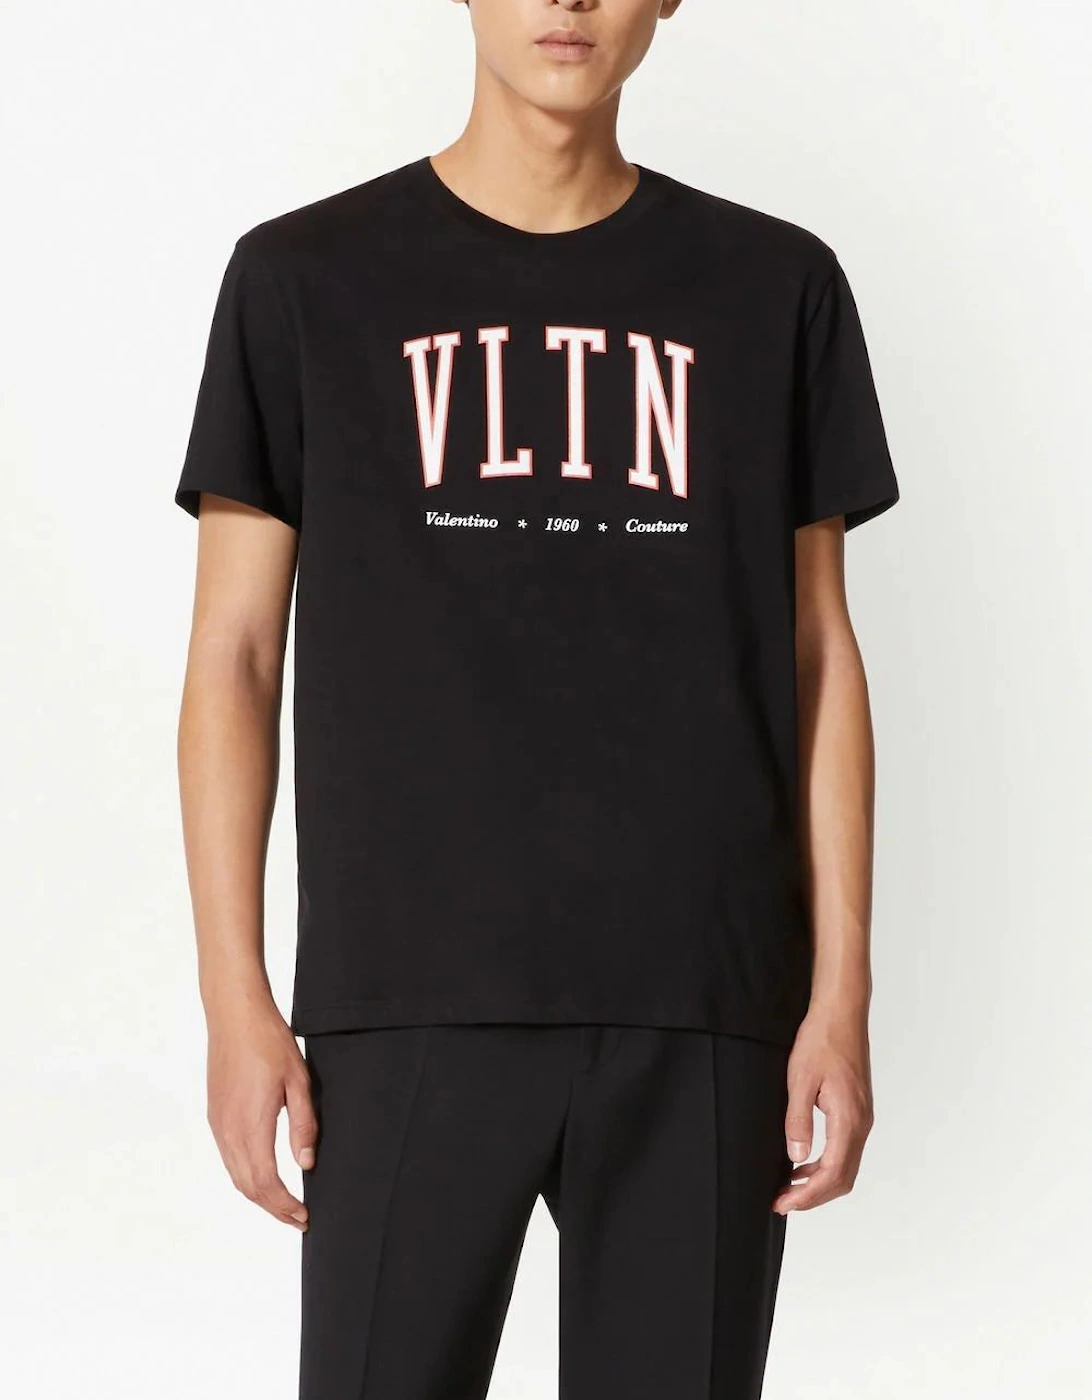 VLTN Print College Logo T-Shirt in Black